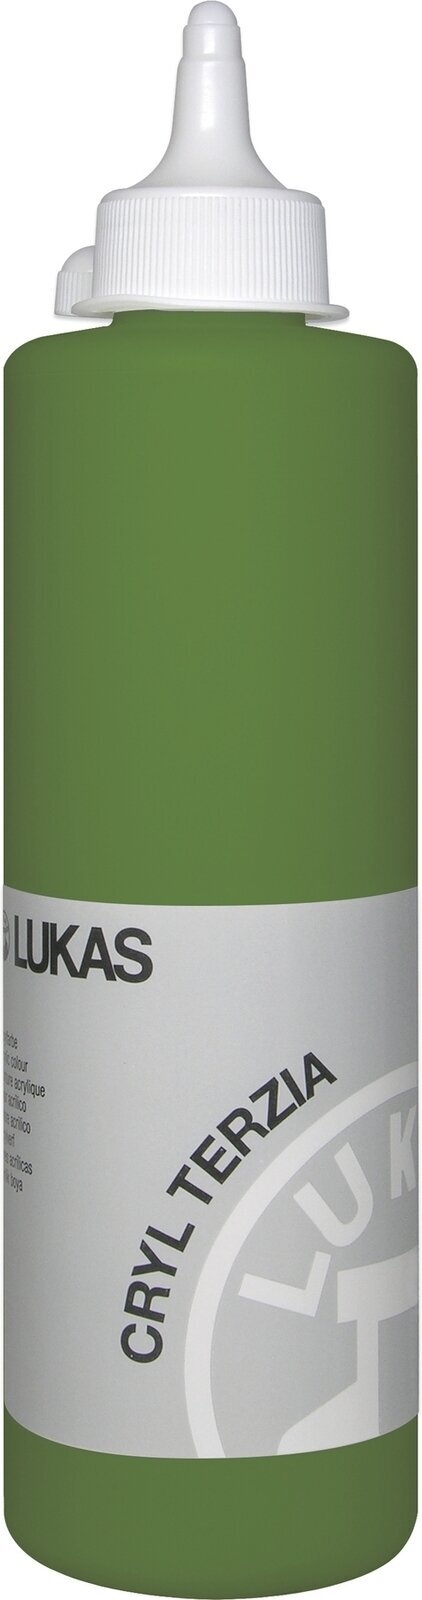 Akrilna barva Lukas Cryl Terzia Acrylic Paint Plastic Bottle Akrilna barva Sap Green 500 ml 1 kos